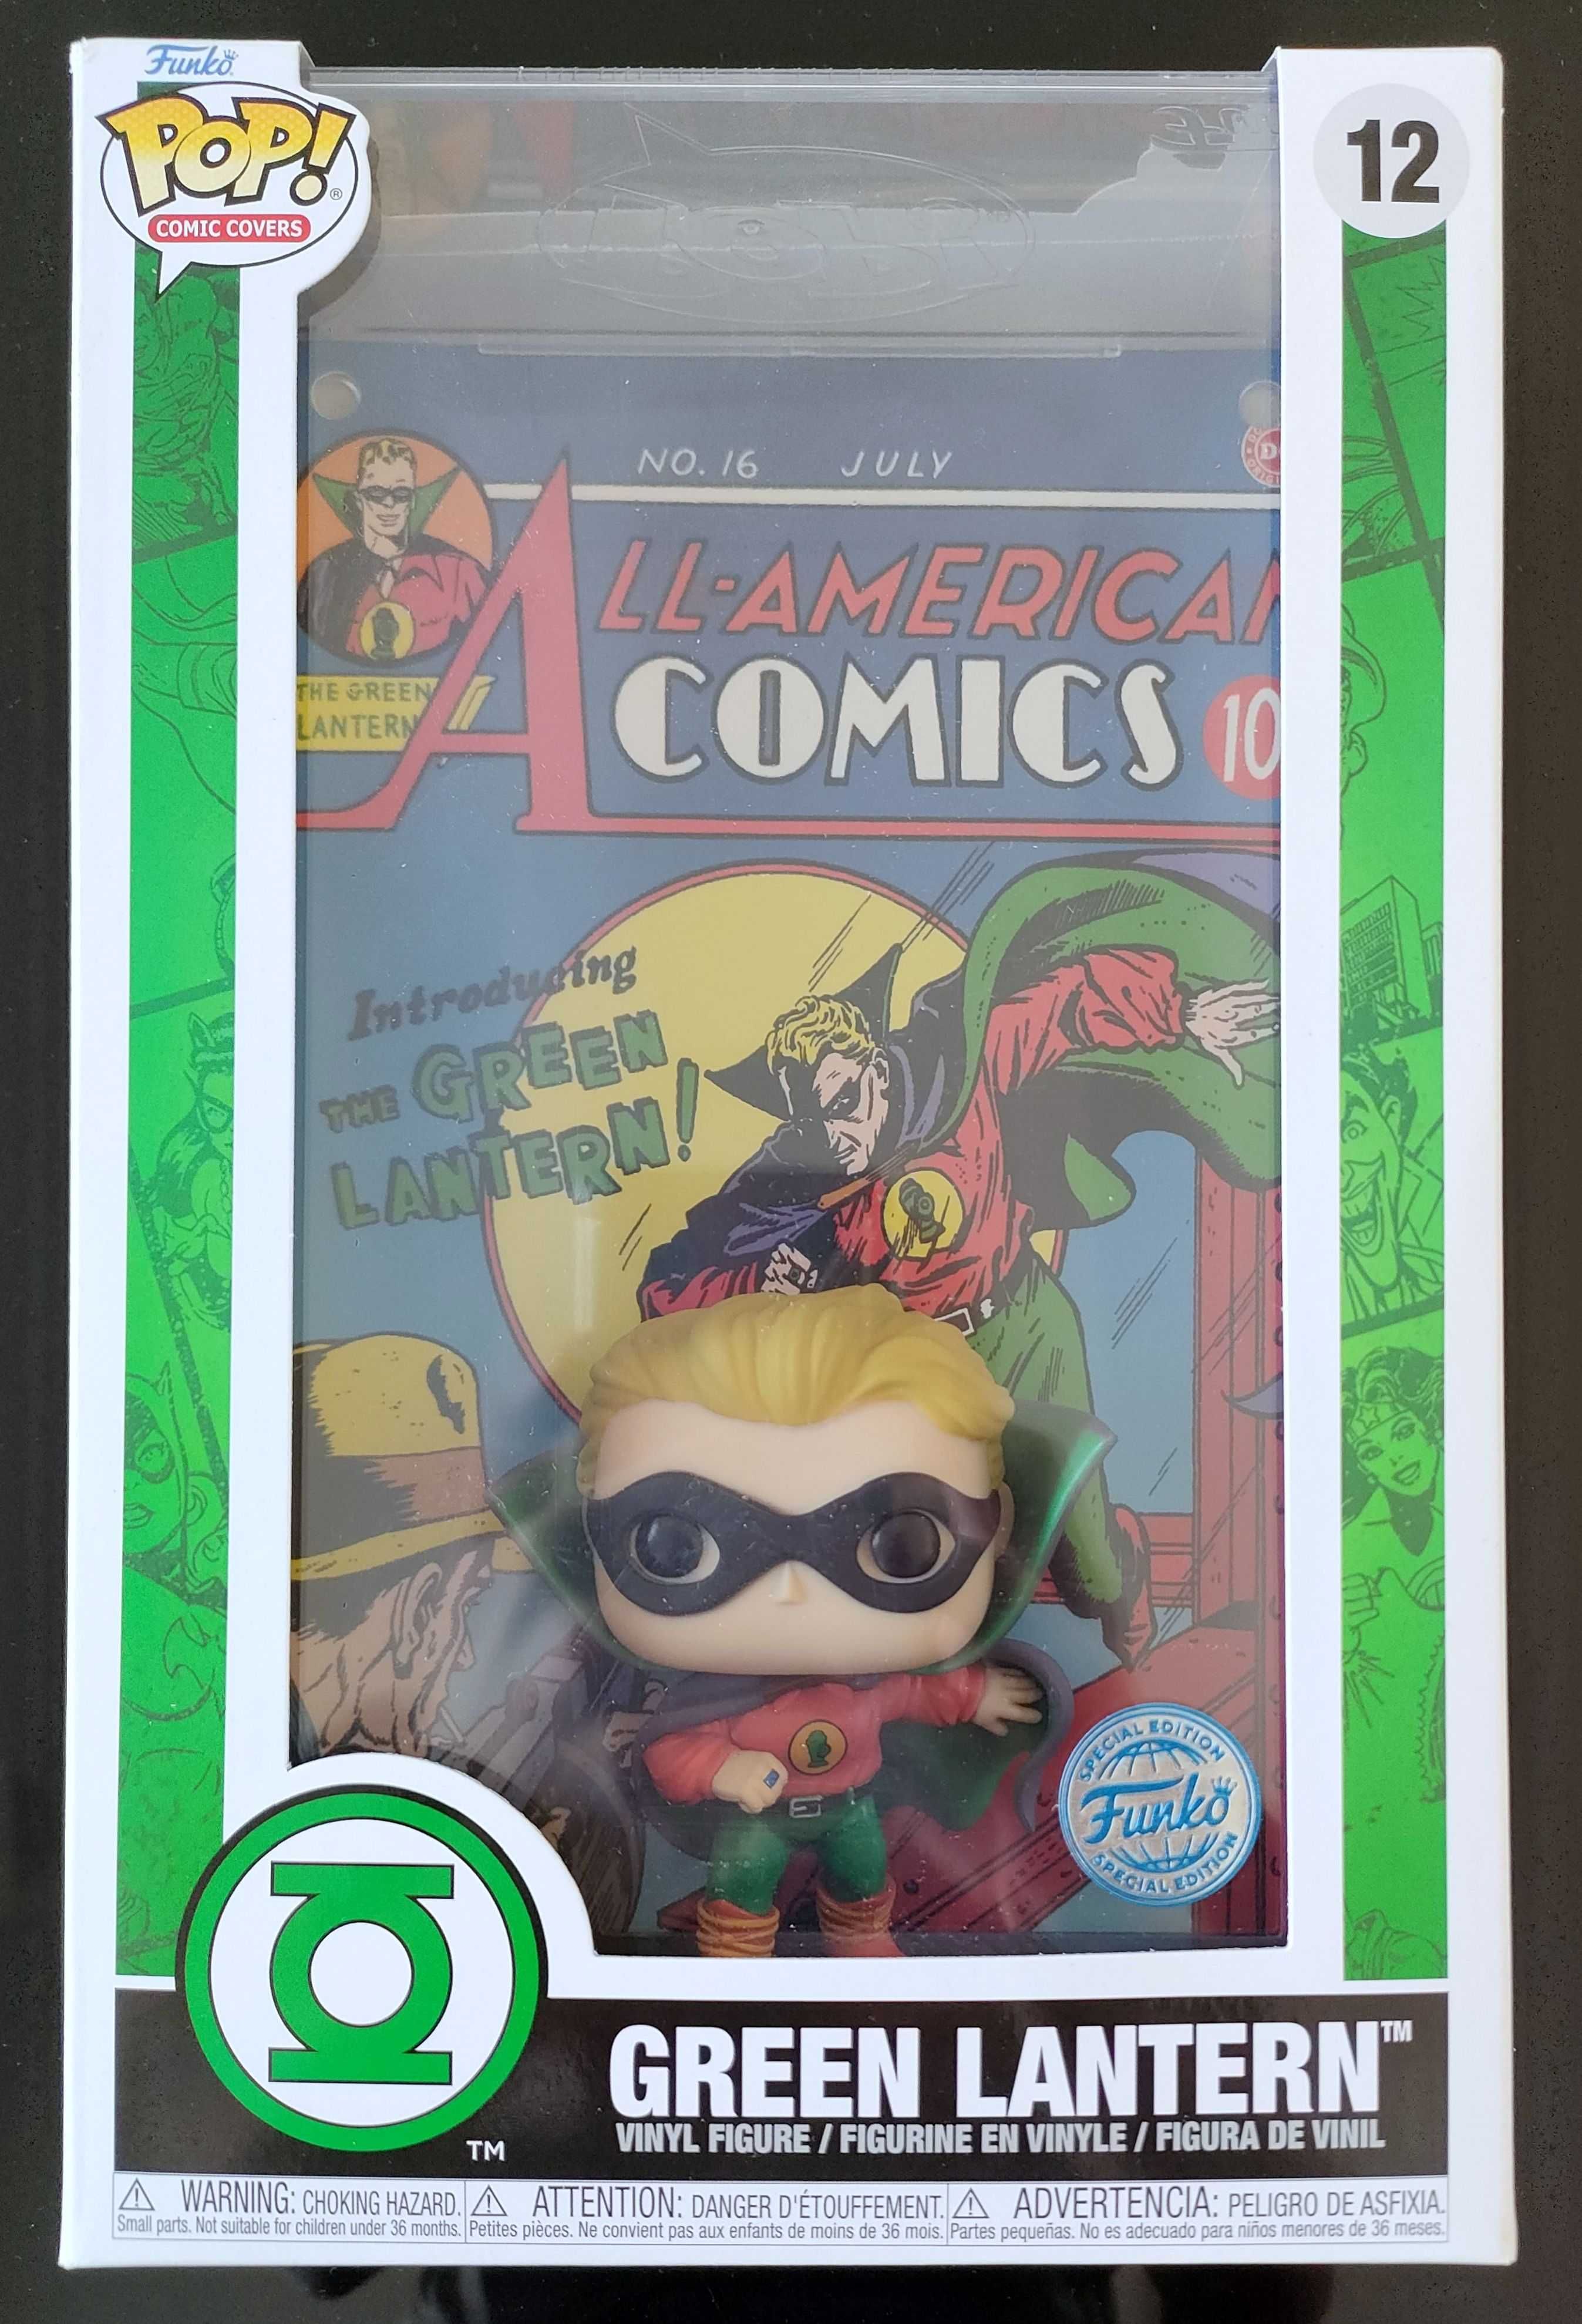 Funko Pop - Green Lantern - Comic Covers #12 All-American Comics